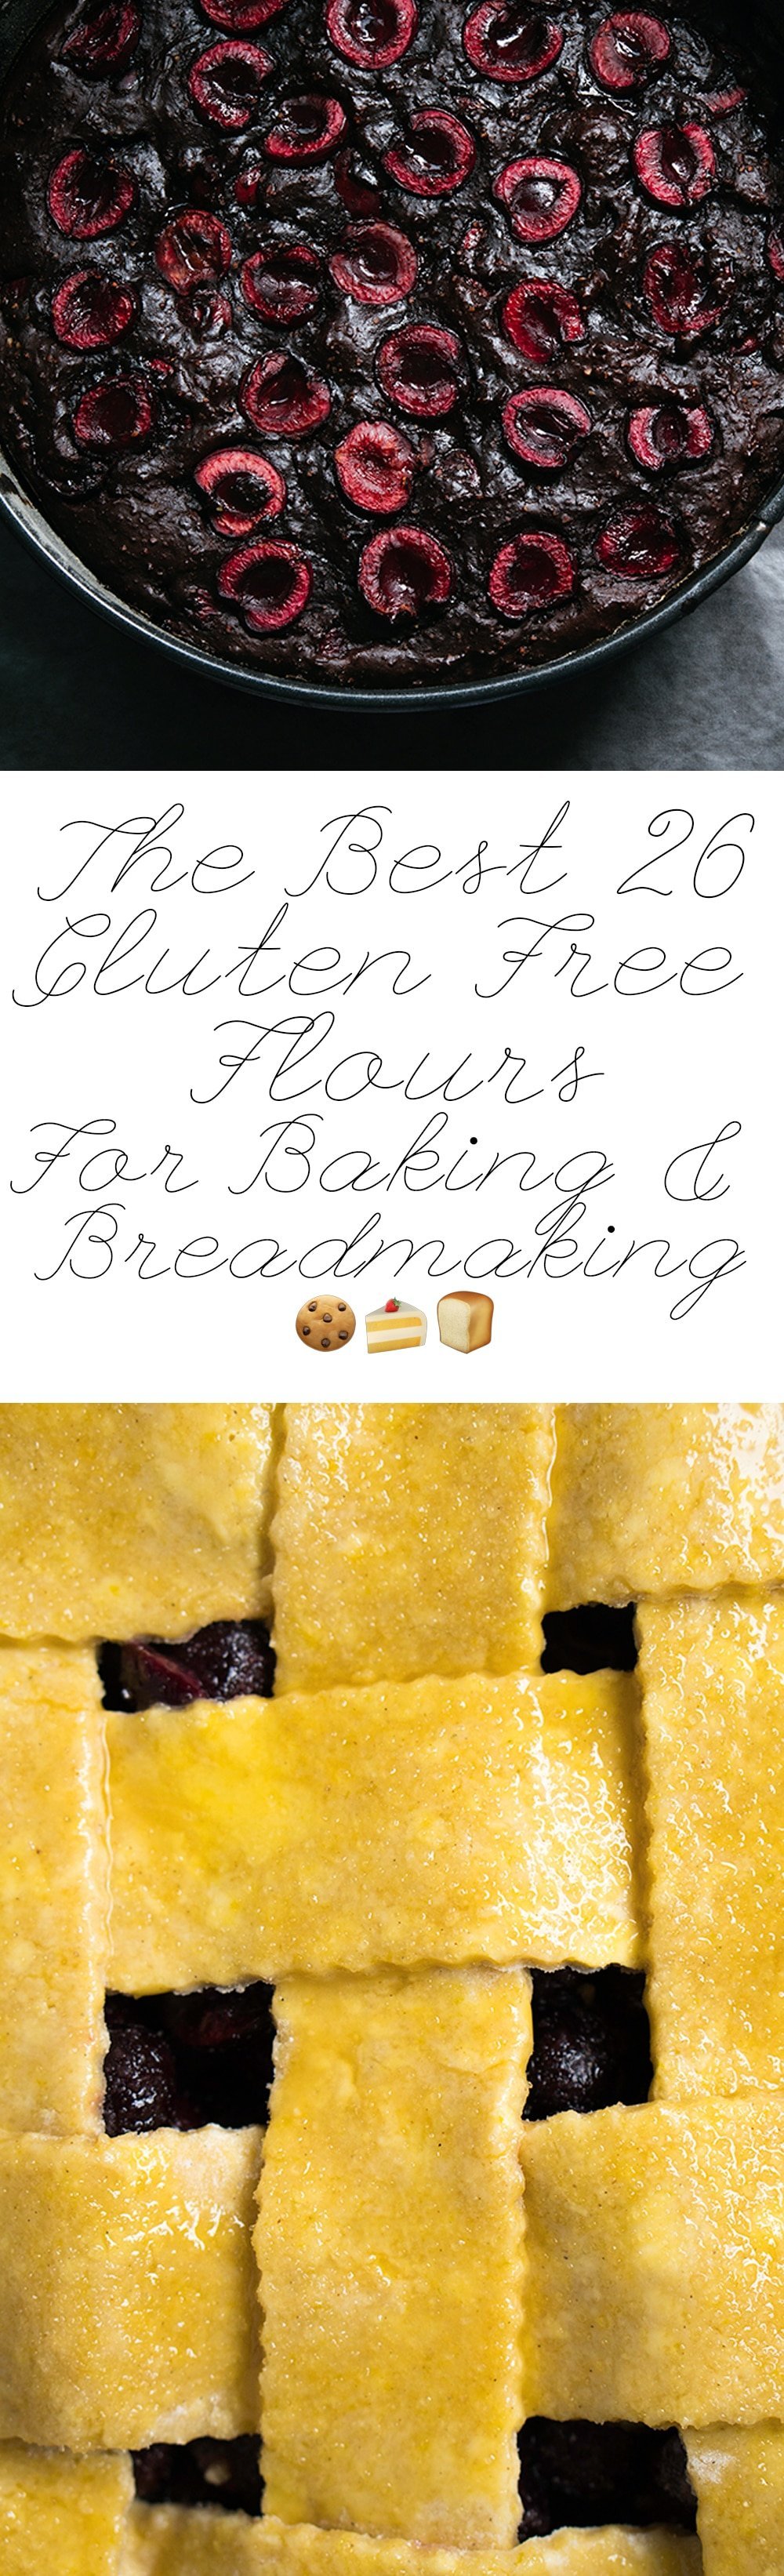 The Best 26 Gluten Free Flours For Baking & Breadmaking ?? ?